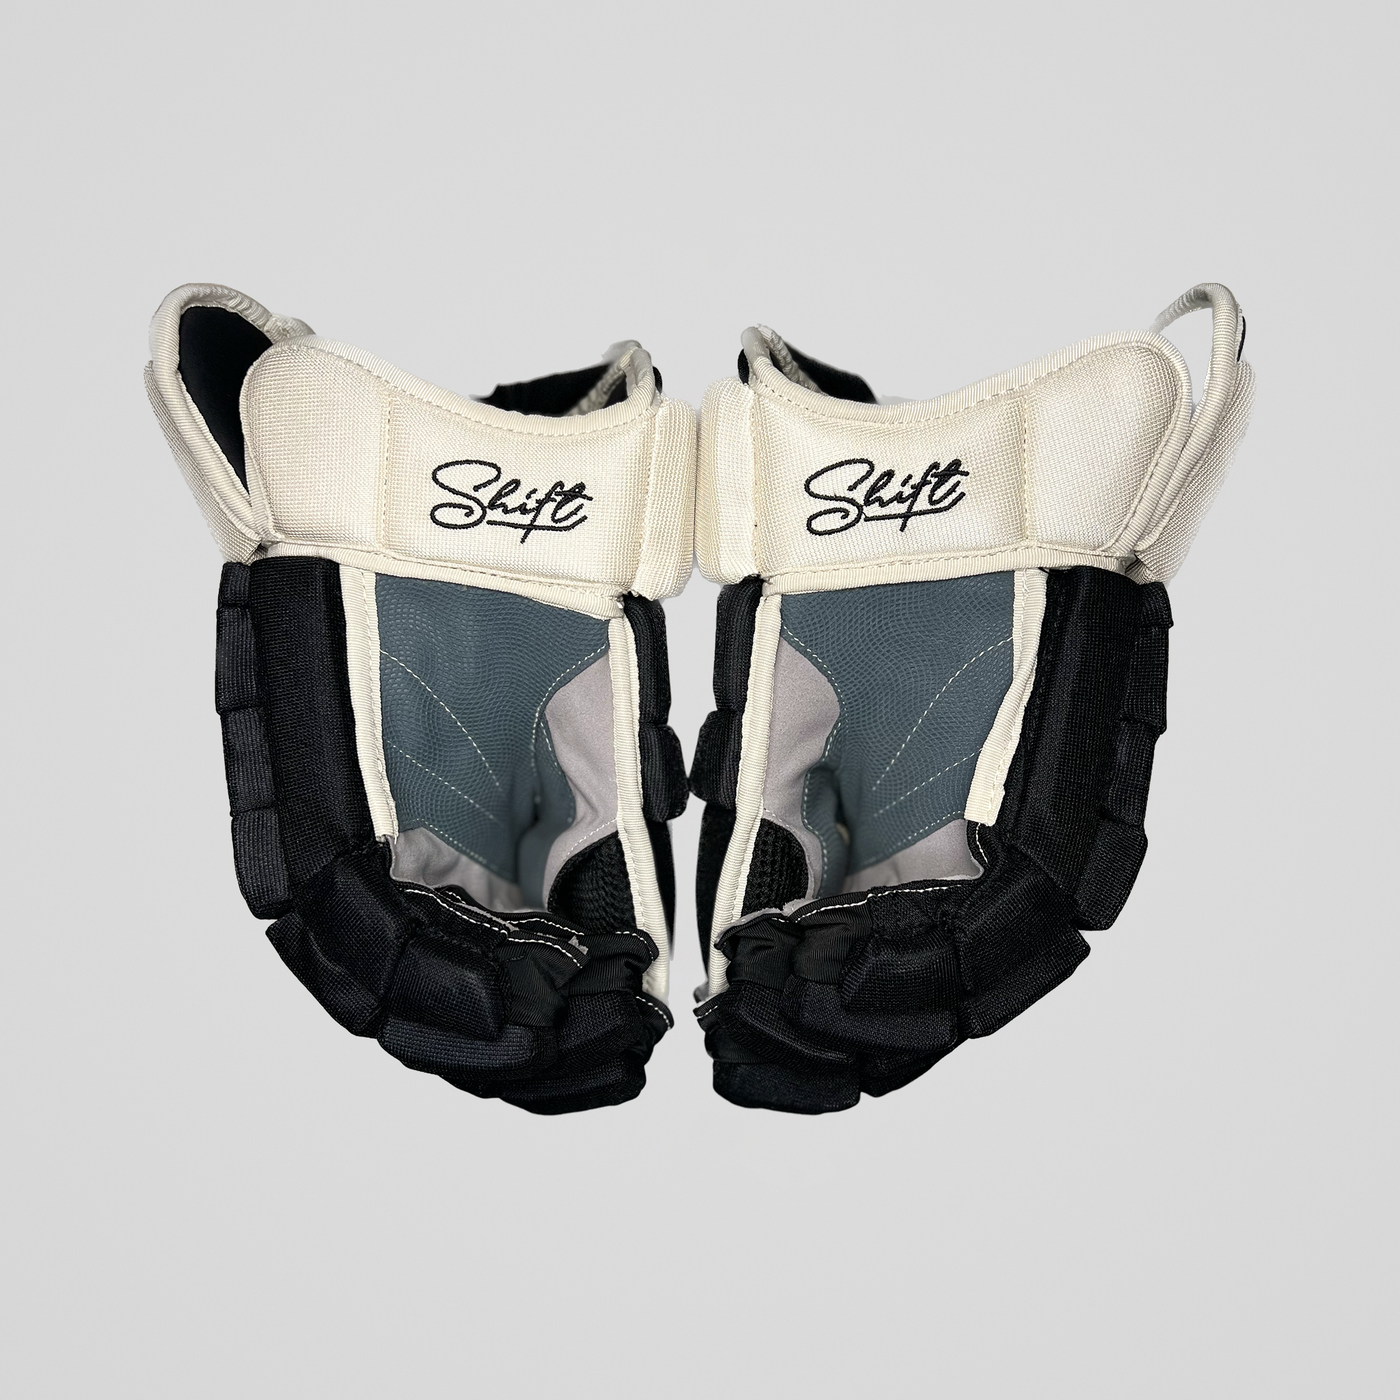 Shift 4-Roll Gloves